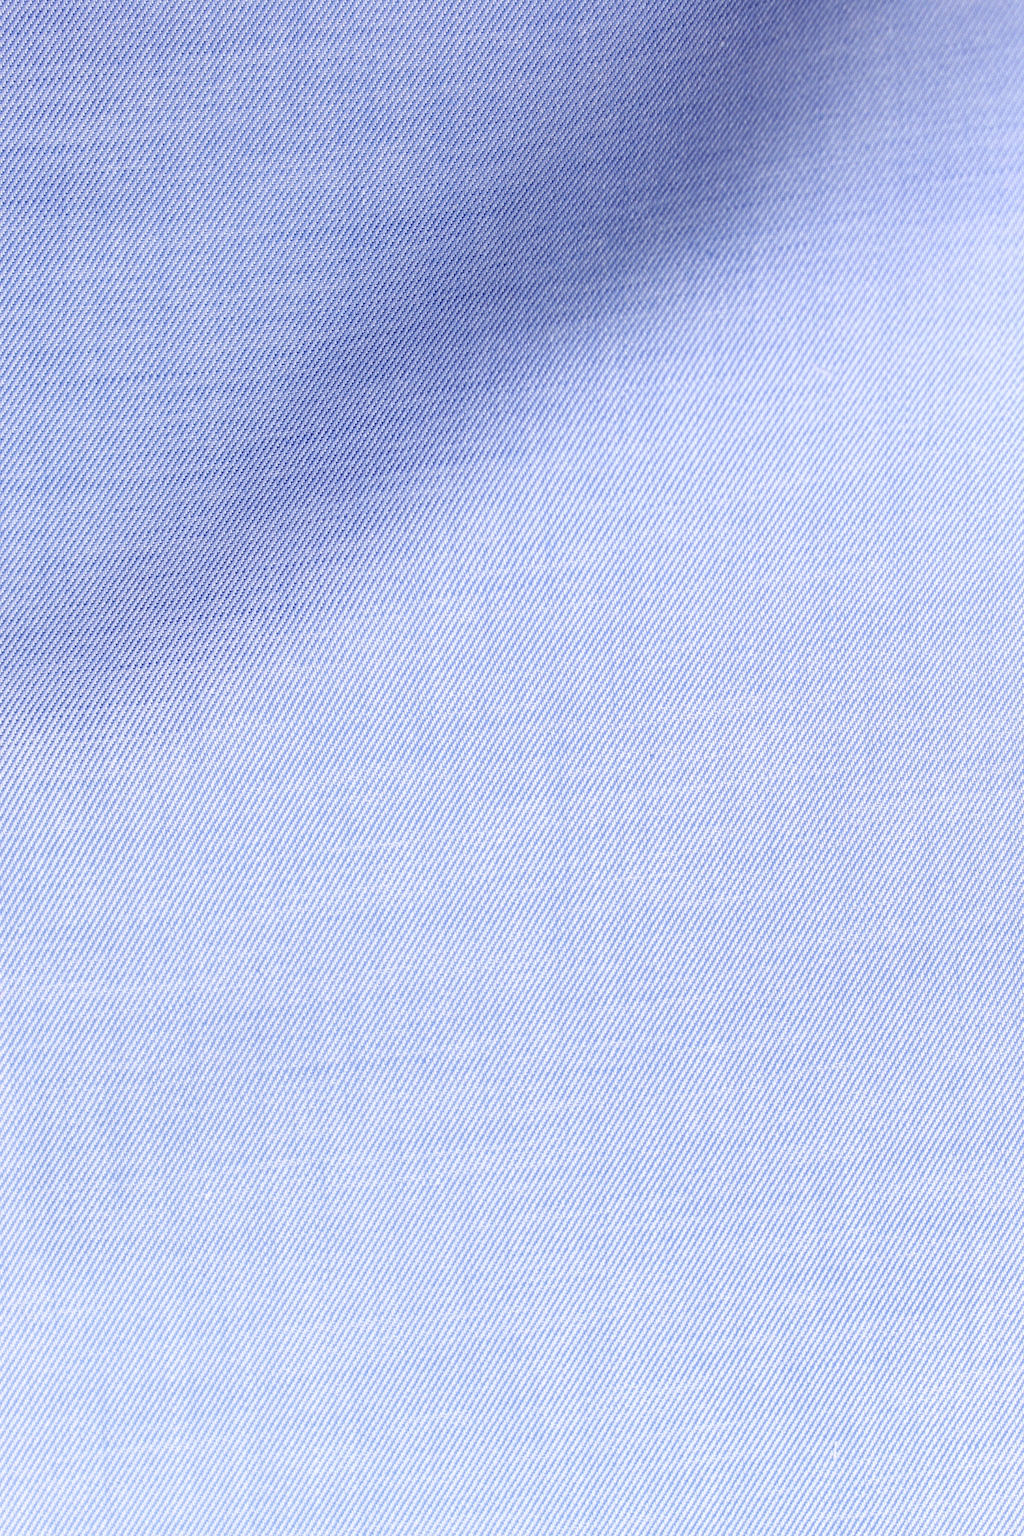 6710 Blue Textured Twill.JPG